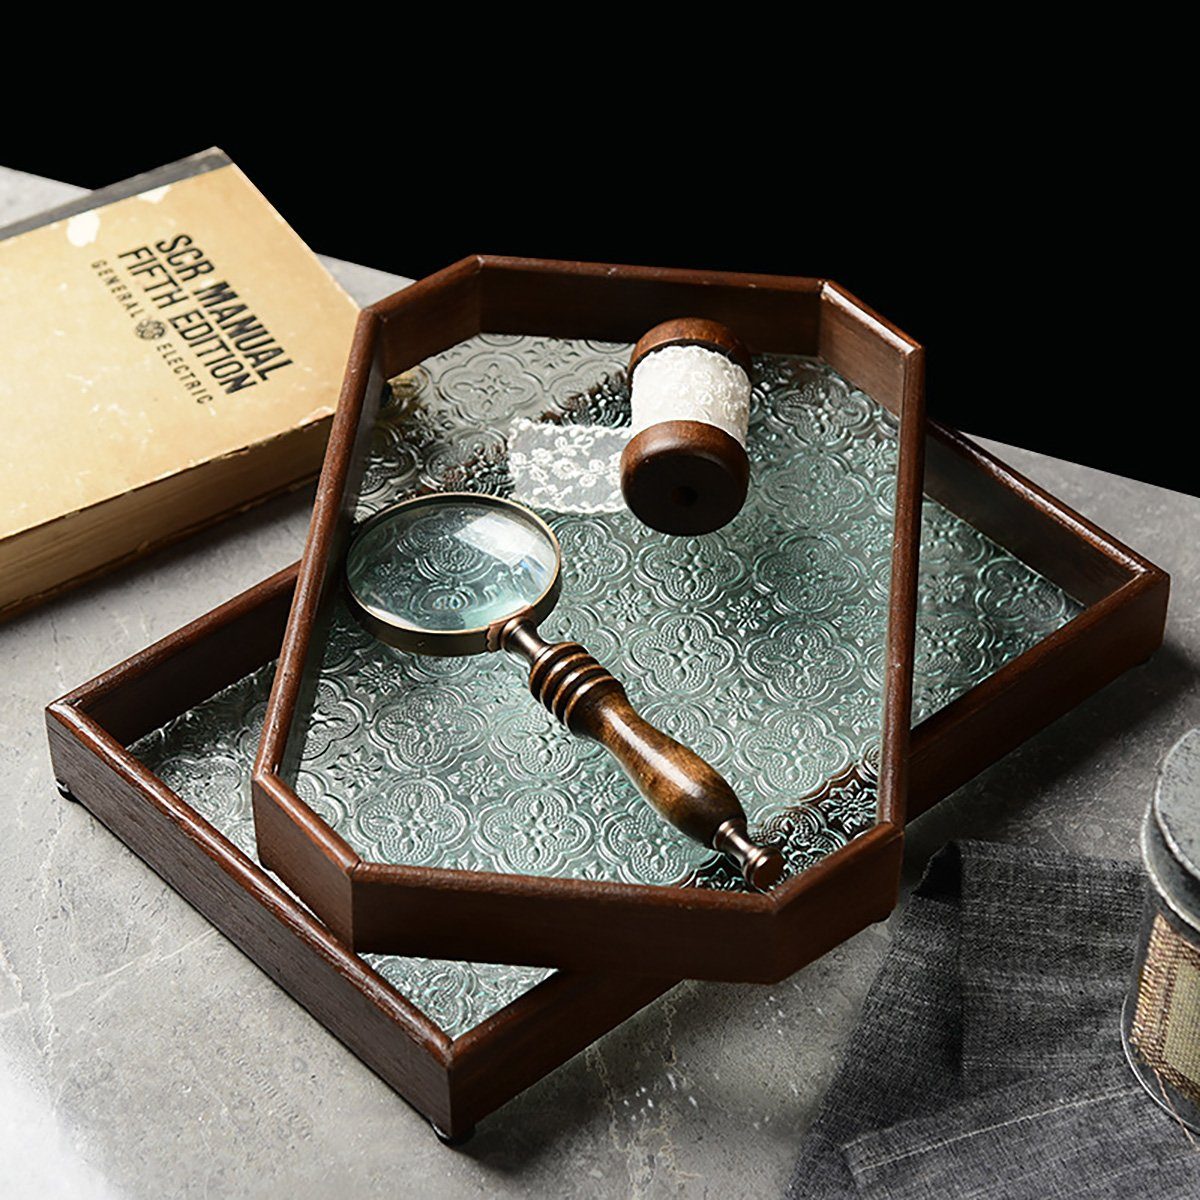 götäzer Tablett Glastablett, aus Badezimmer-Aufbewahrungstablett Braun Retro-Kaffeetablett Holz